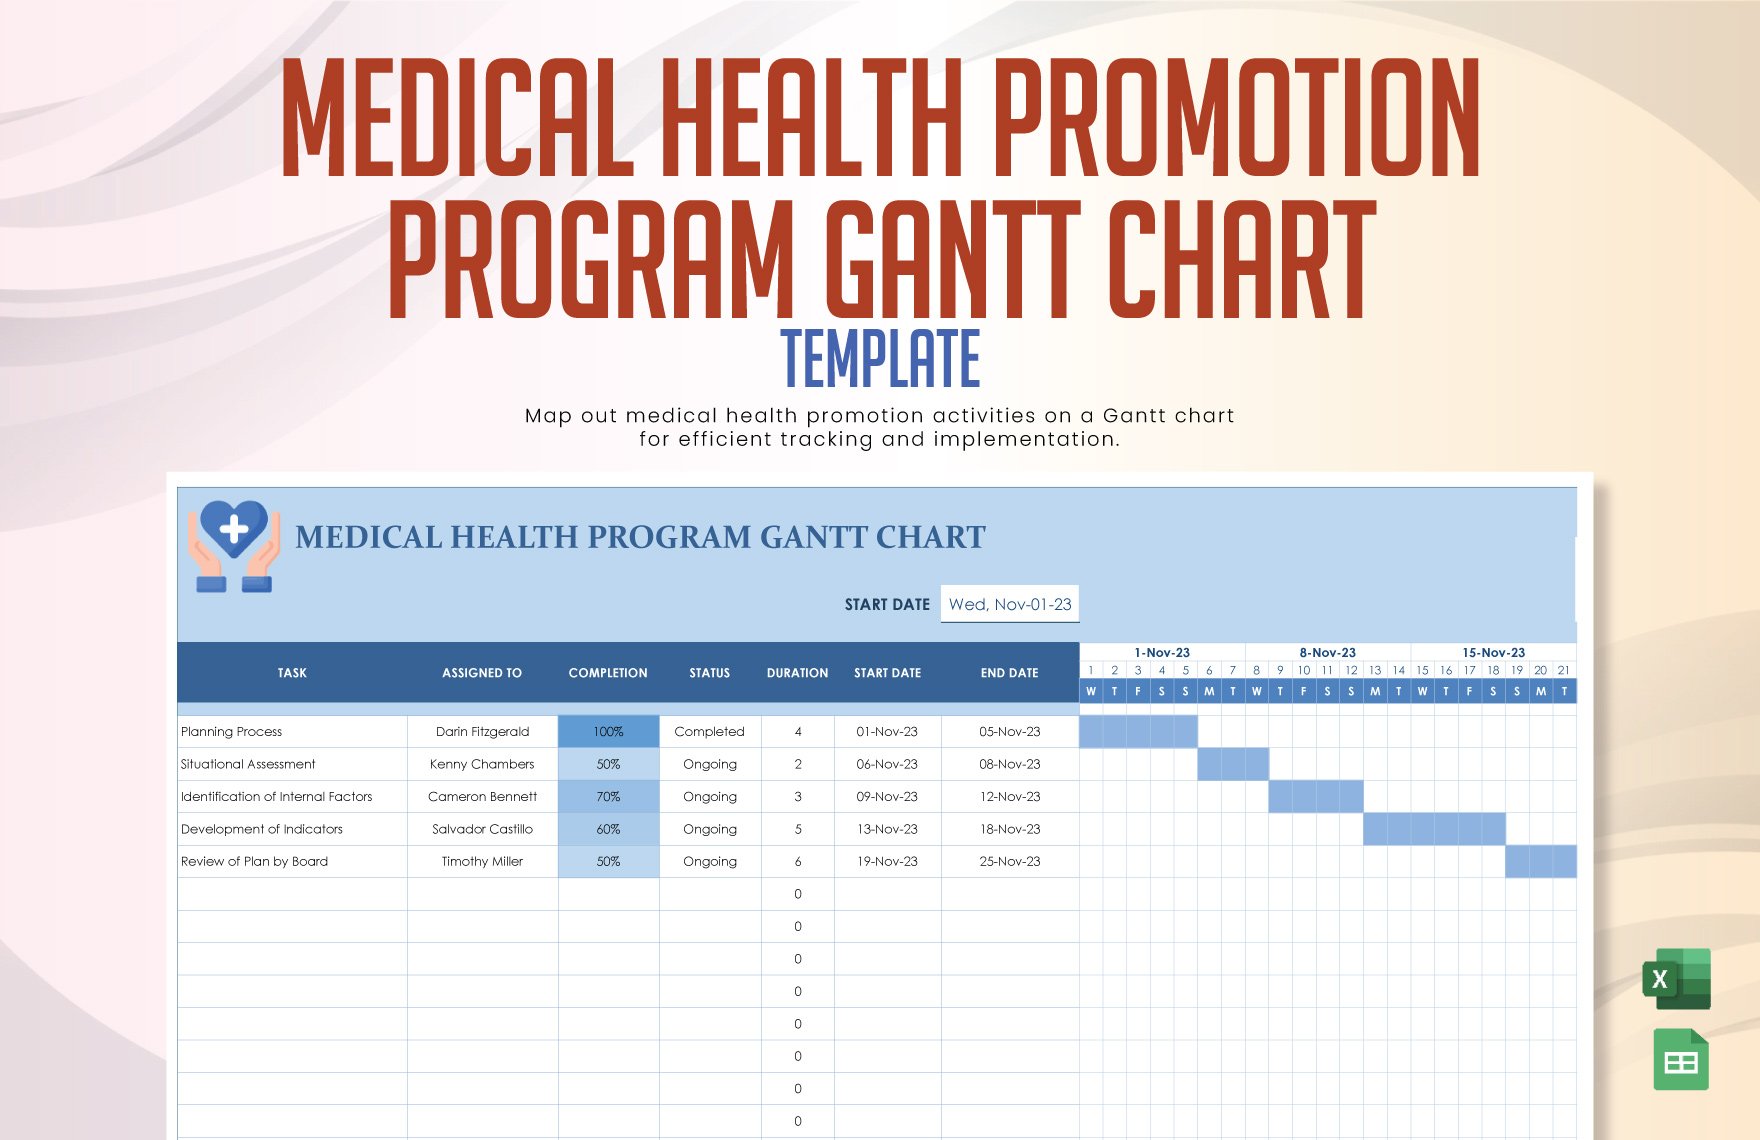 Medical Health Promotion Program Gantt Chart Template in Excel, Google Sheets